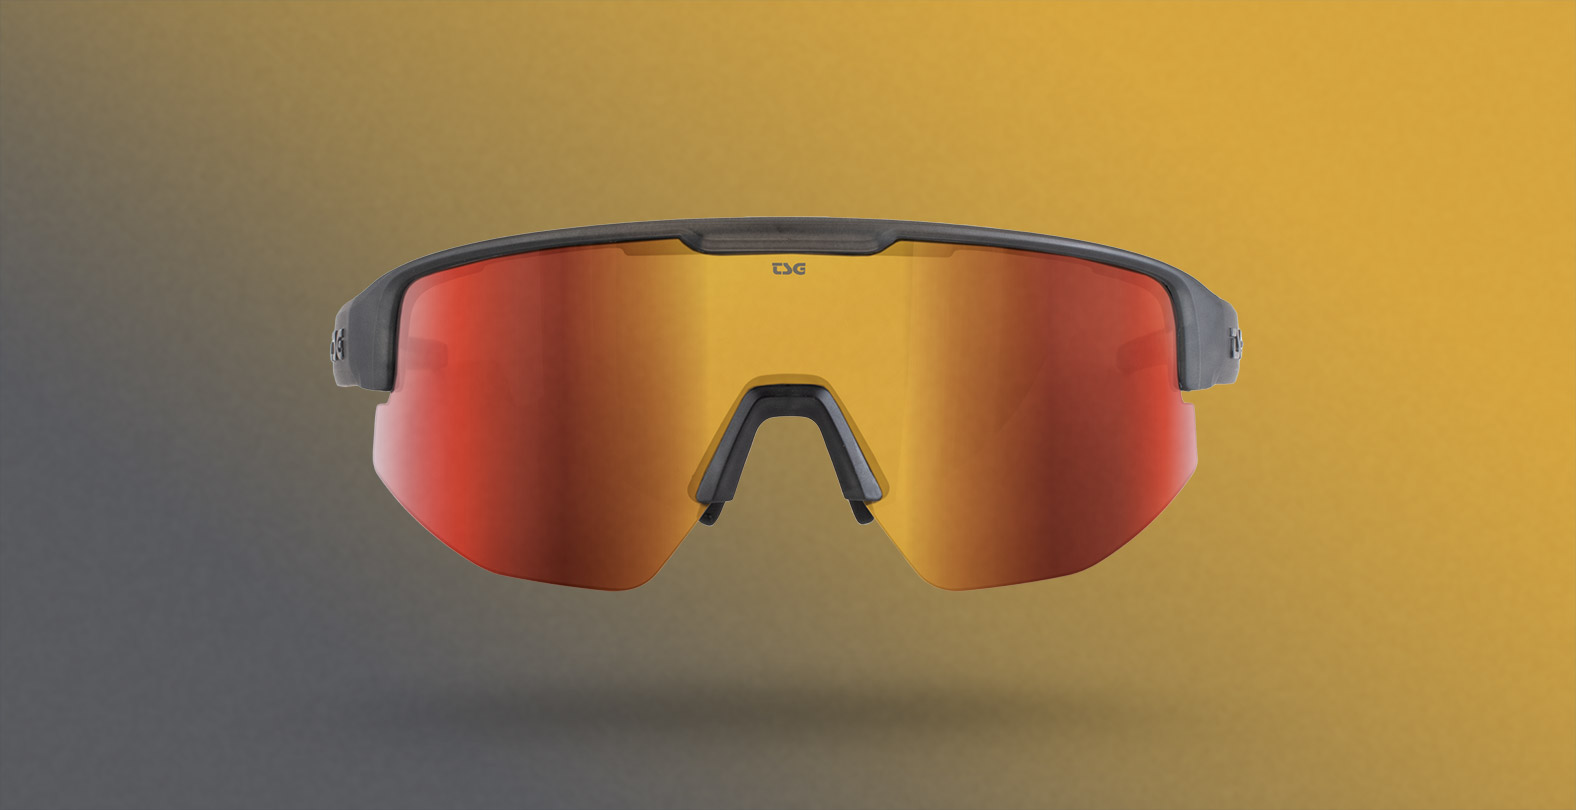 TSG Loam sunglasses black with rainbow chrome lens